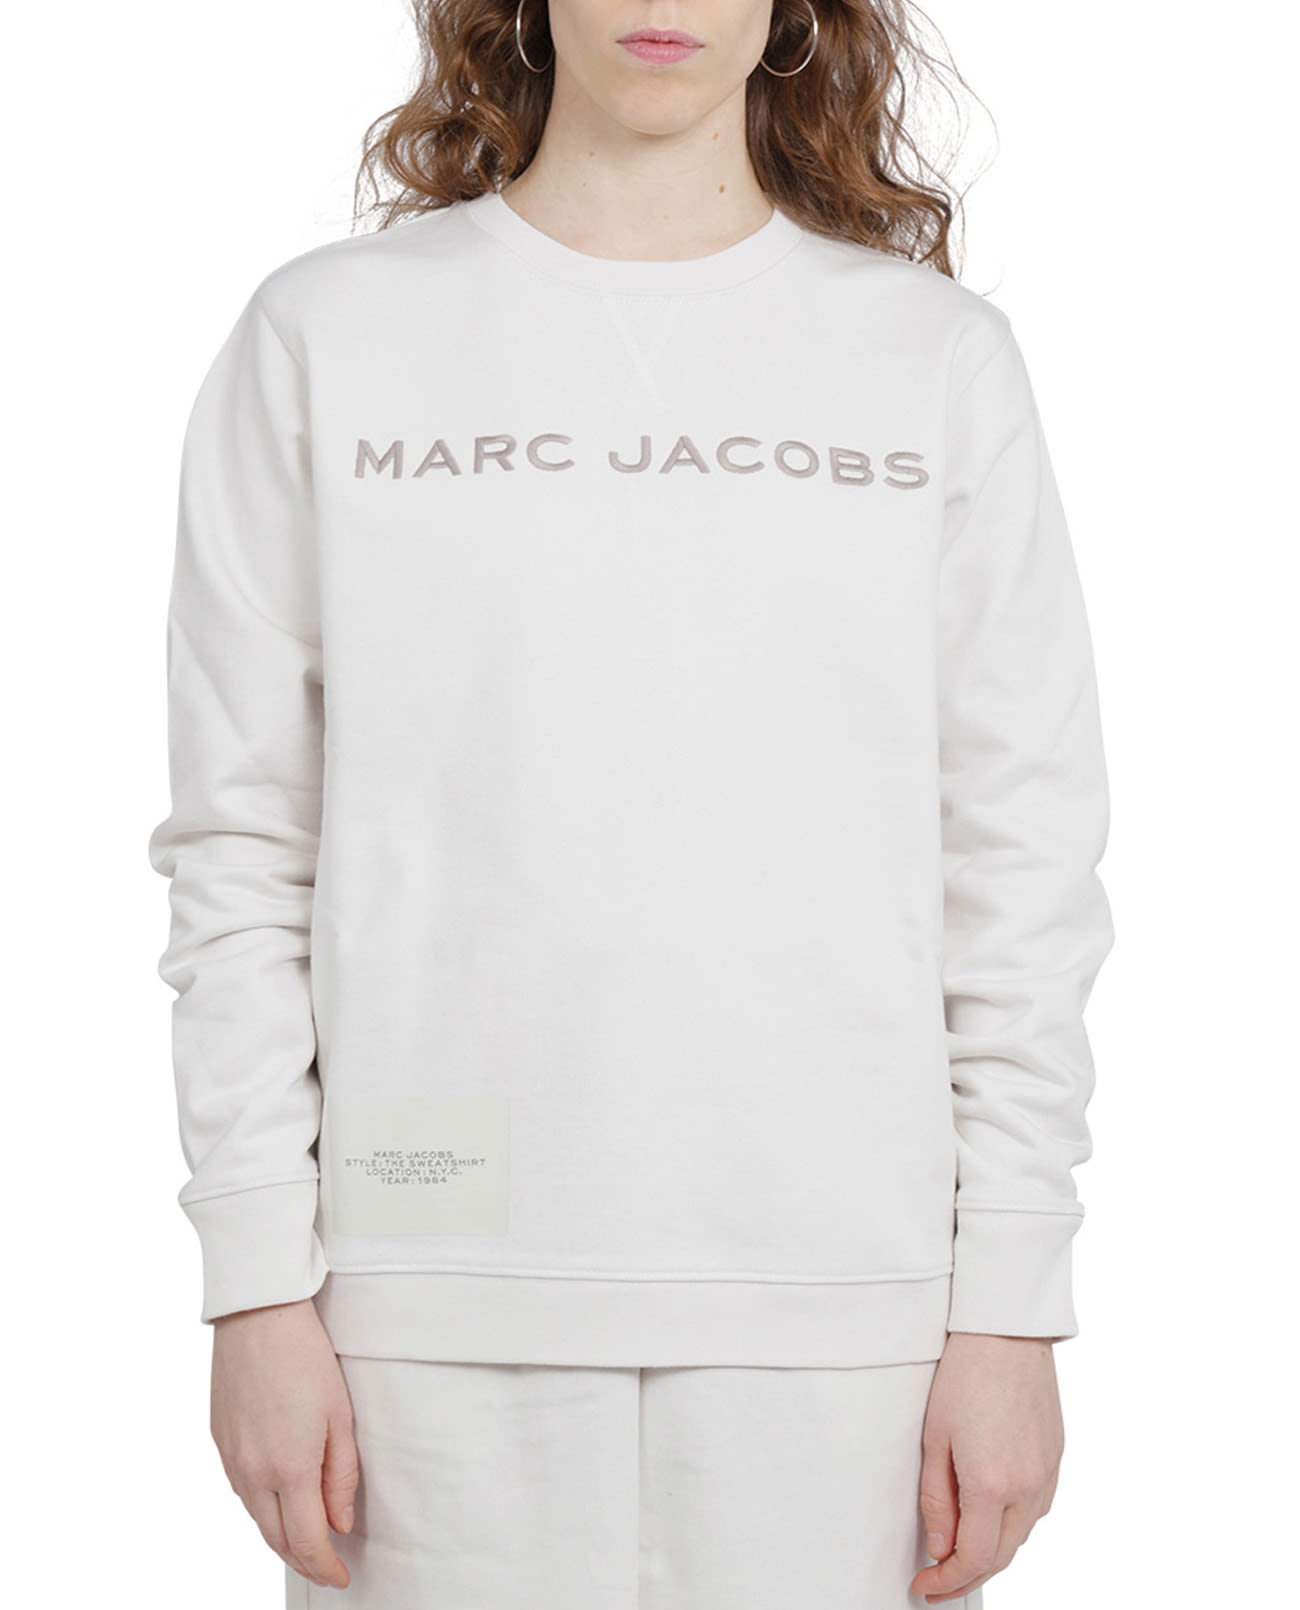 Marc Jacobs White Sweatshirt